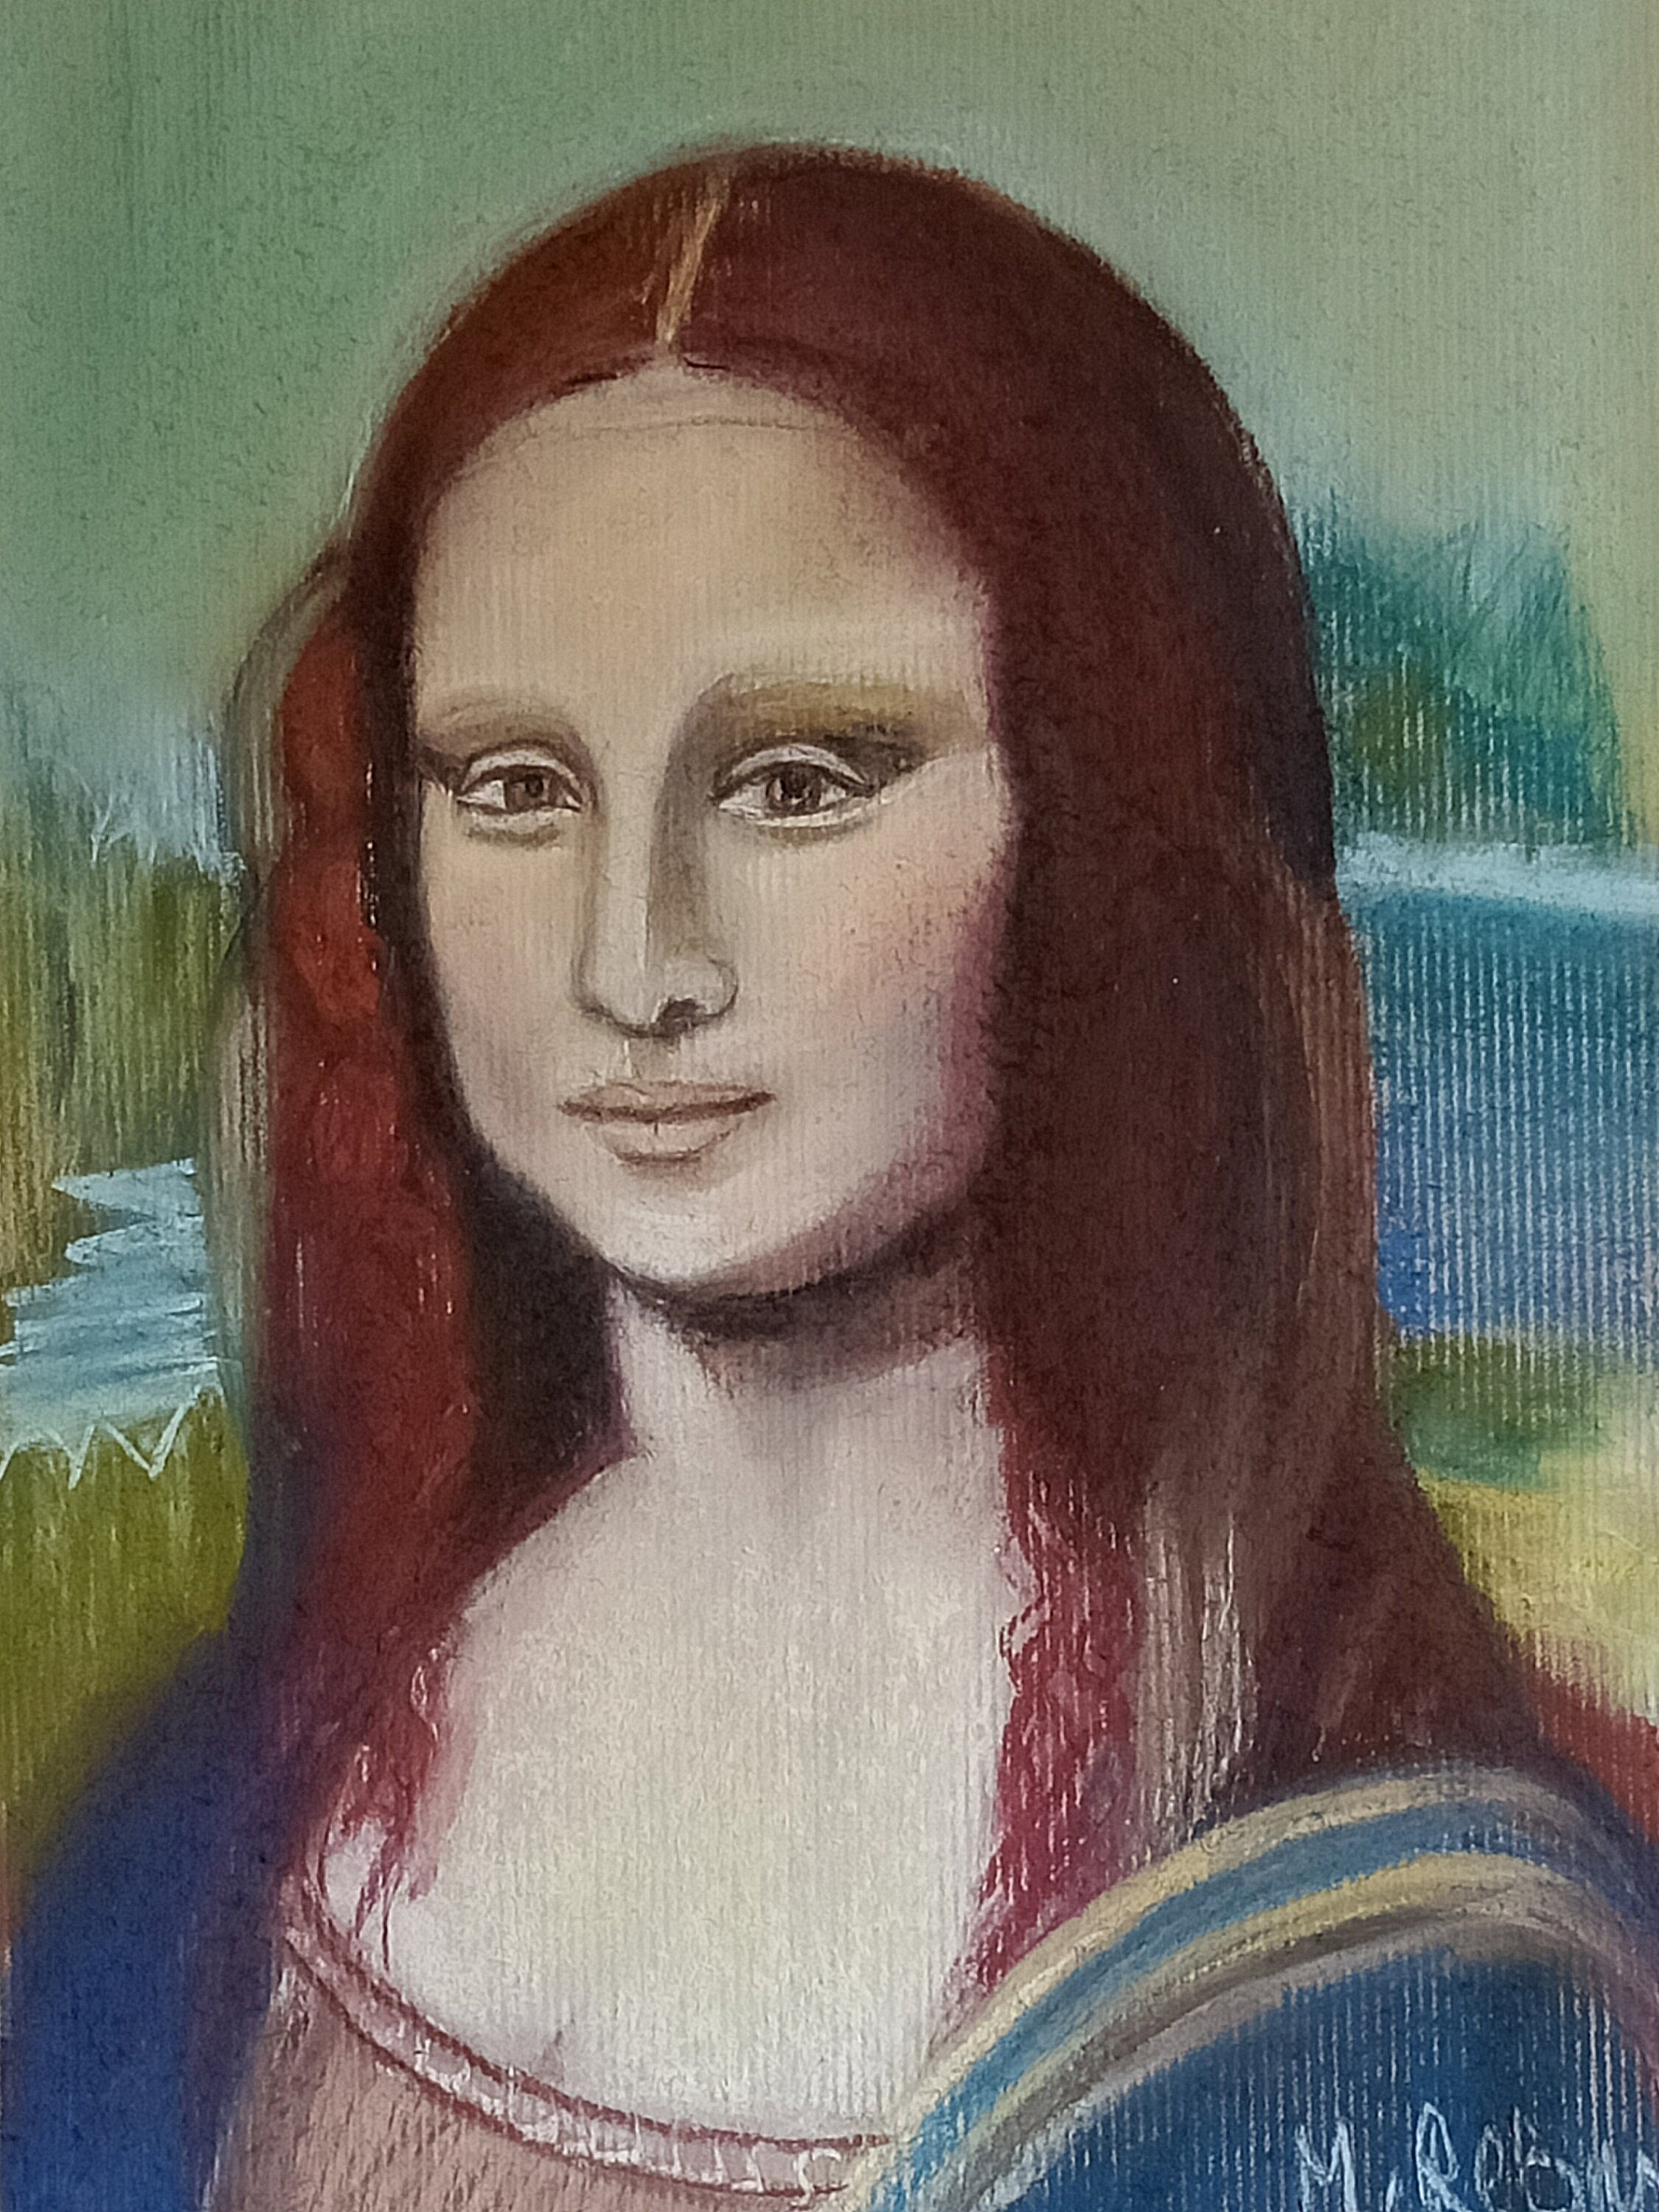 Museum Quality Mona Lisa Replica By PortraitFlip | 100% Handpainted